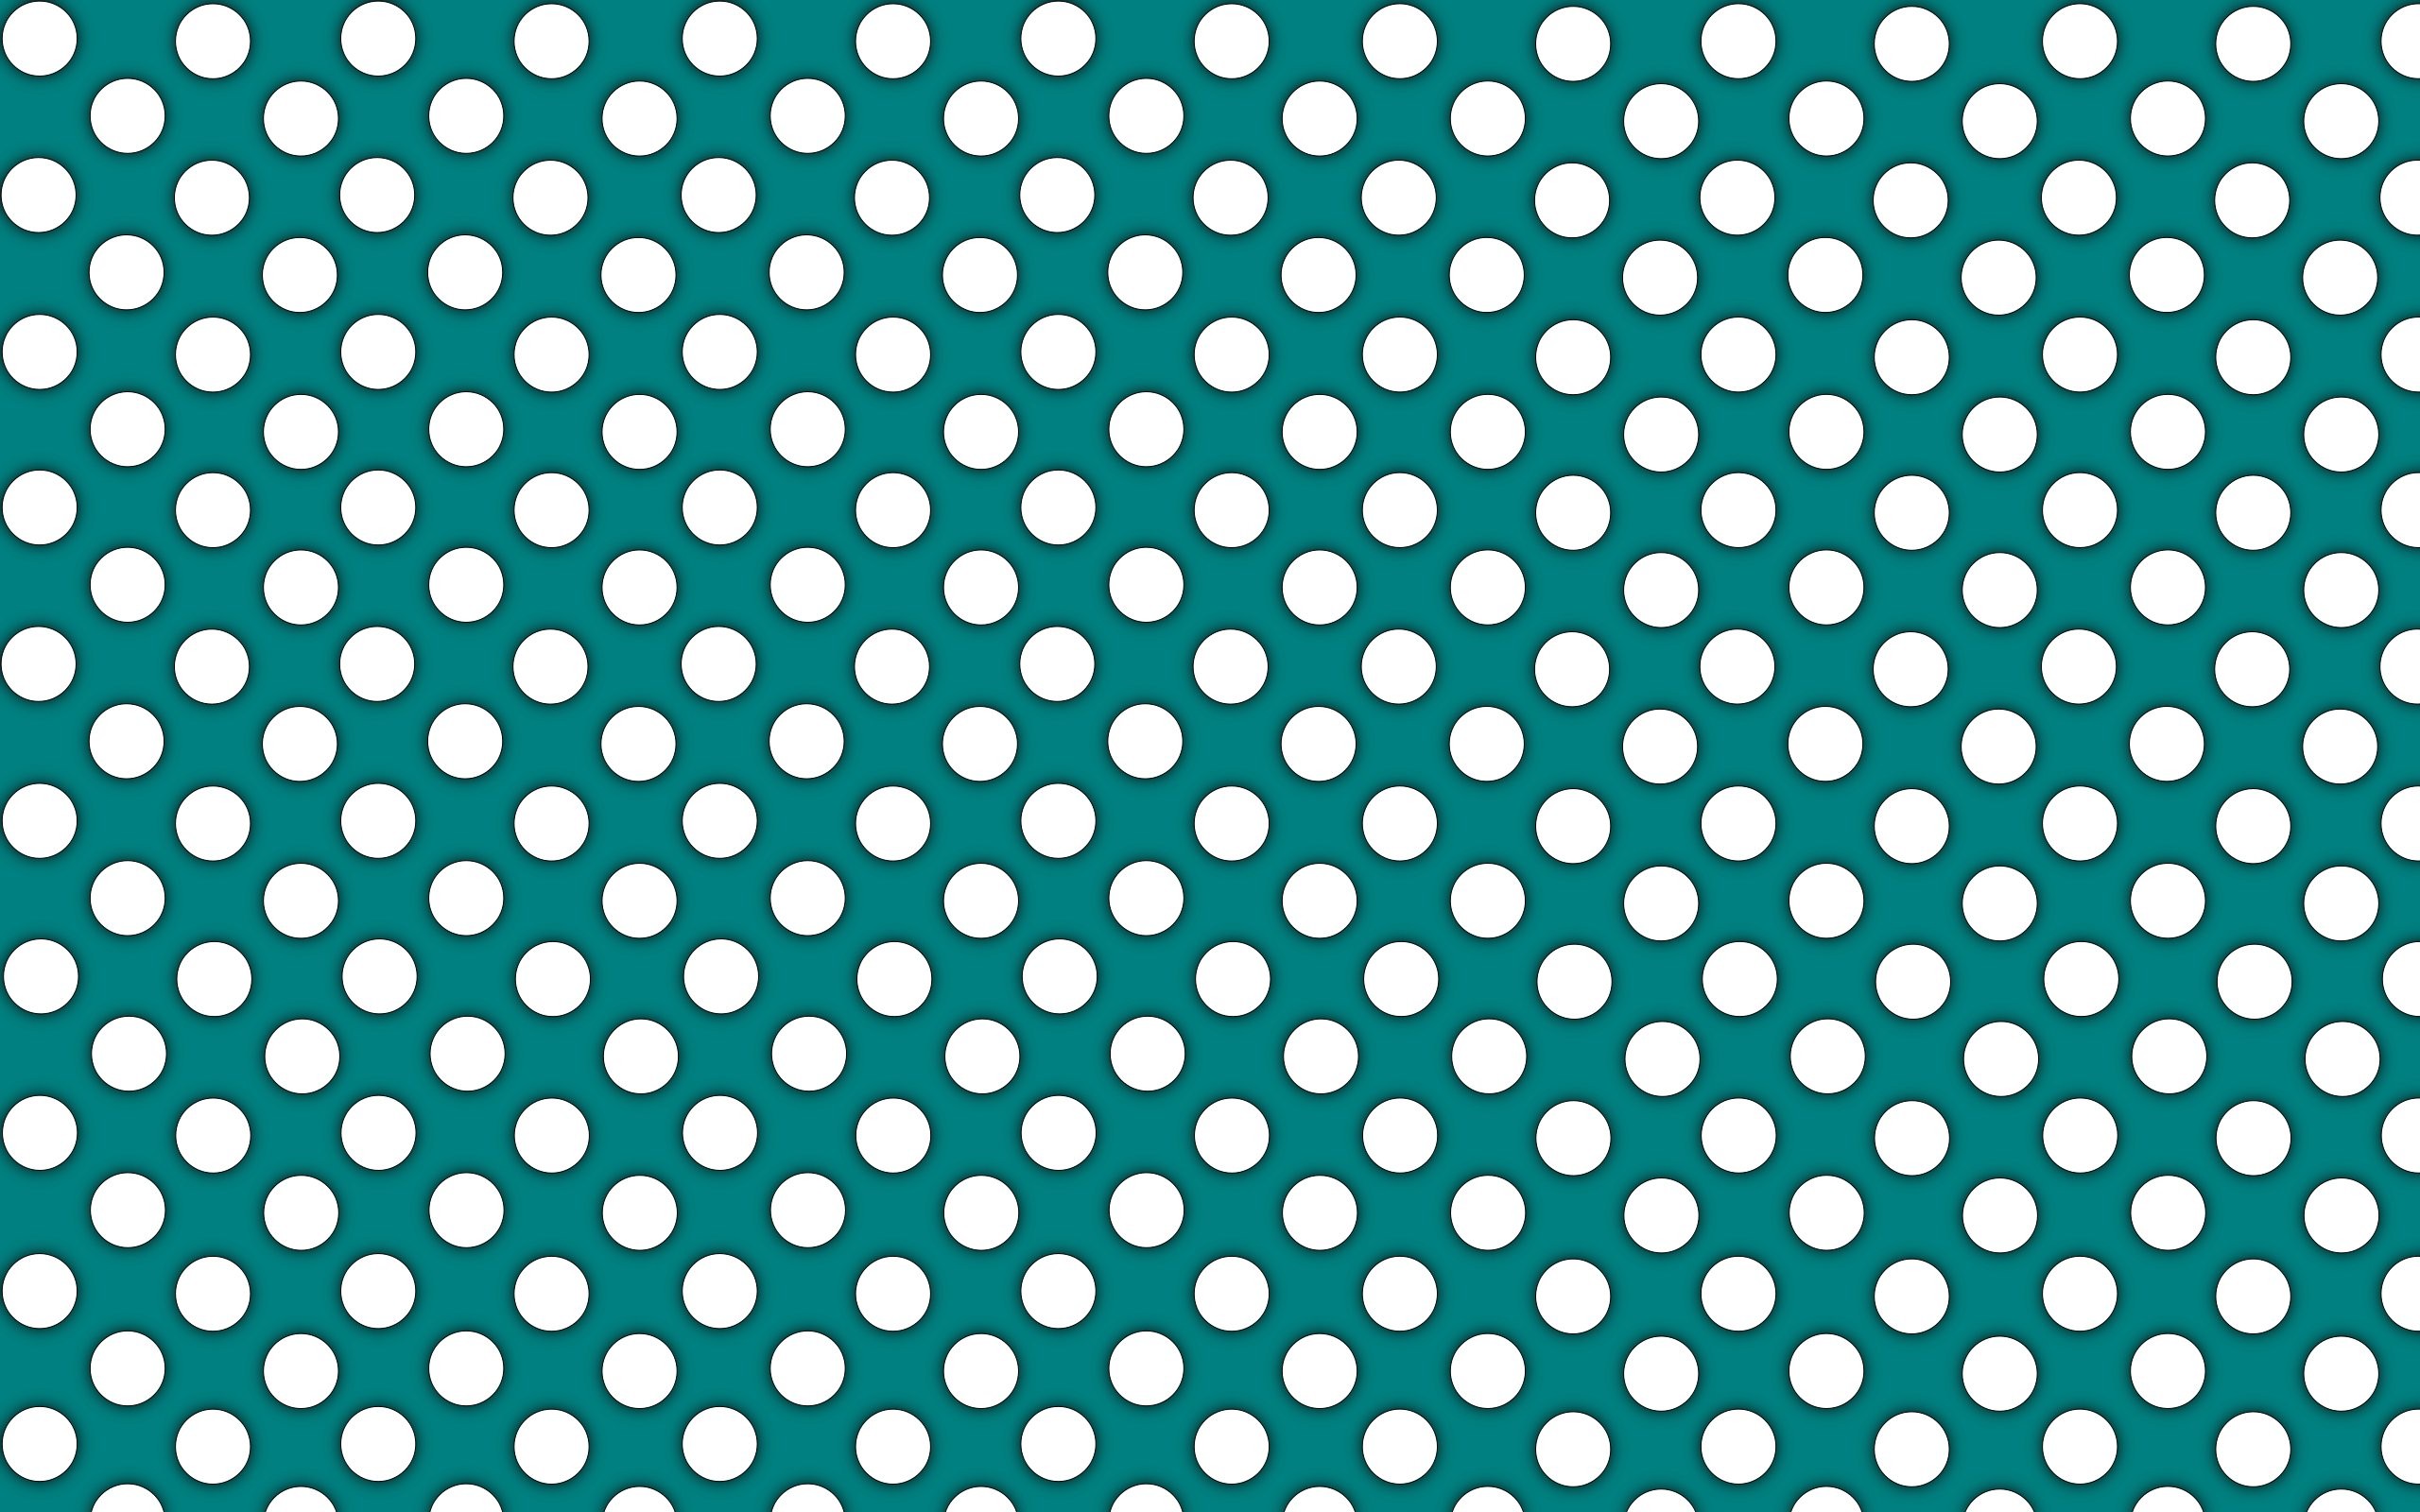 polka dot wallpaper,pattern,polka dot,aqua,turquoise,line